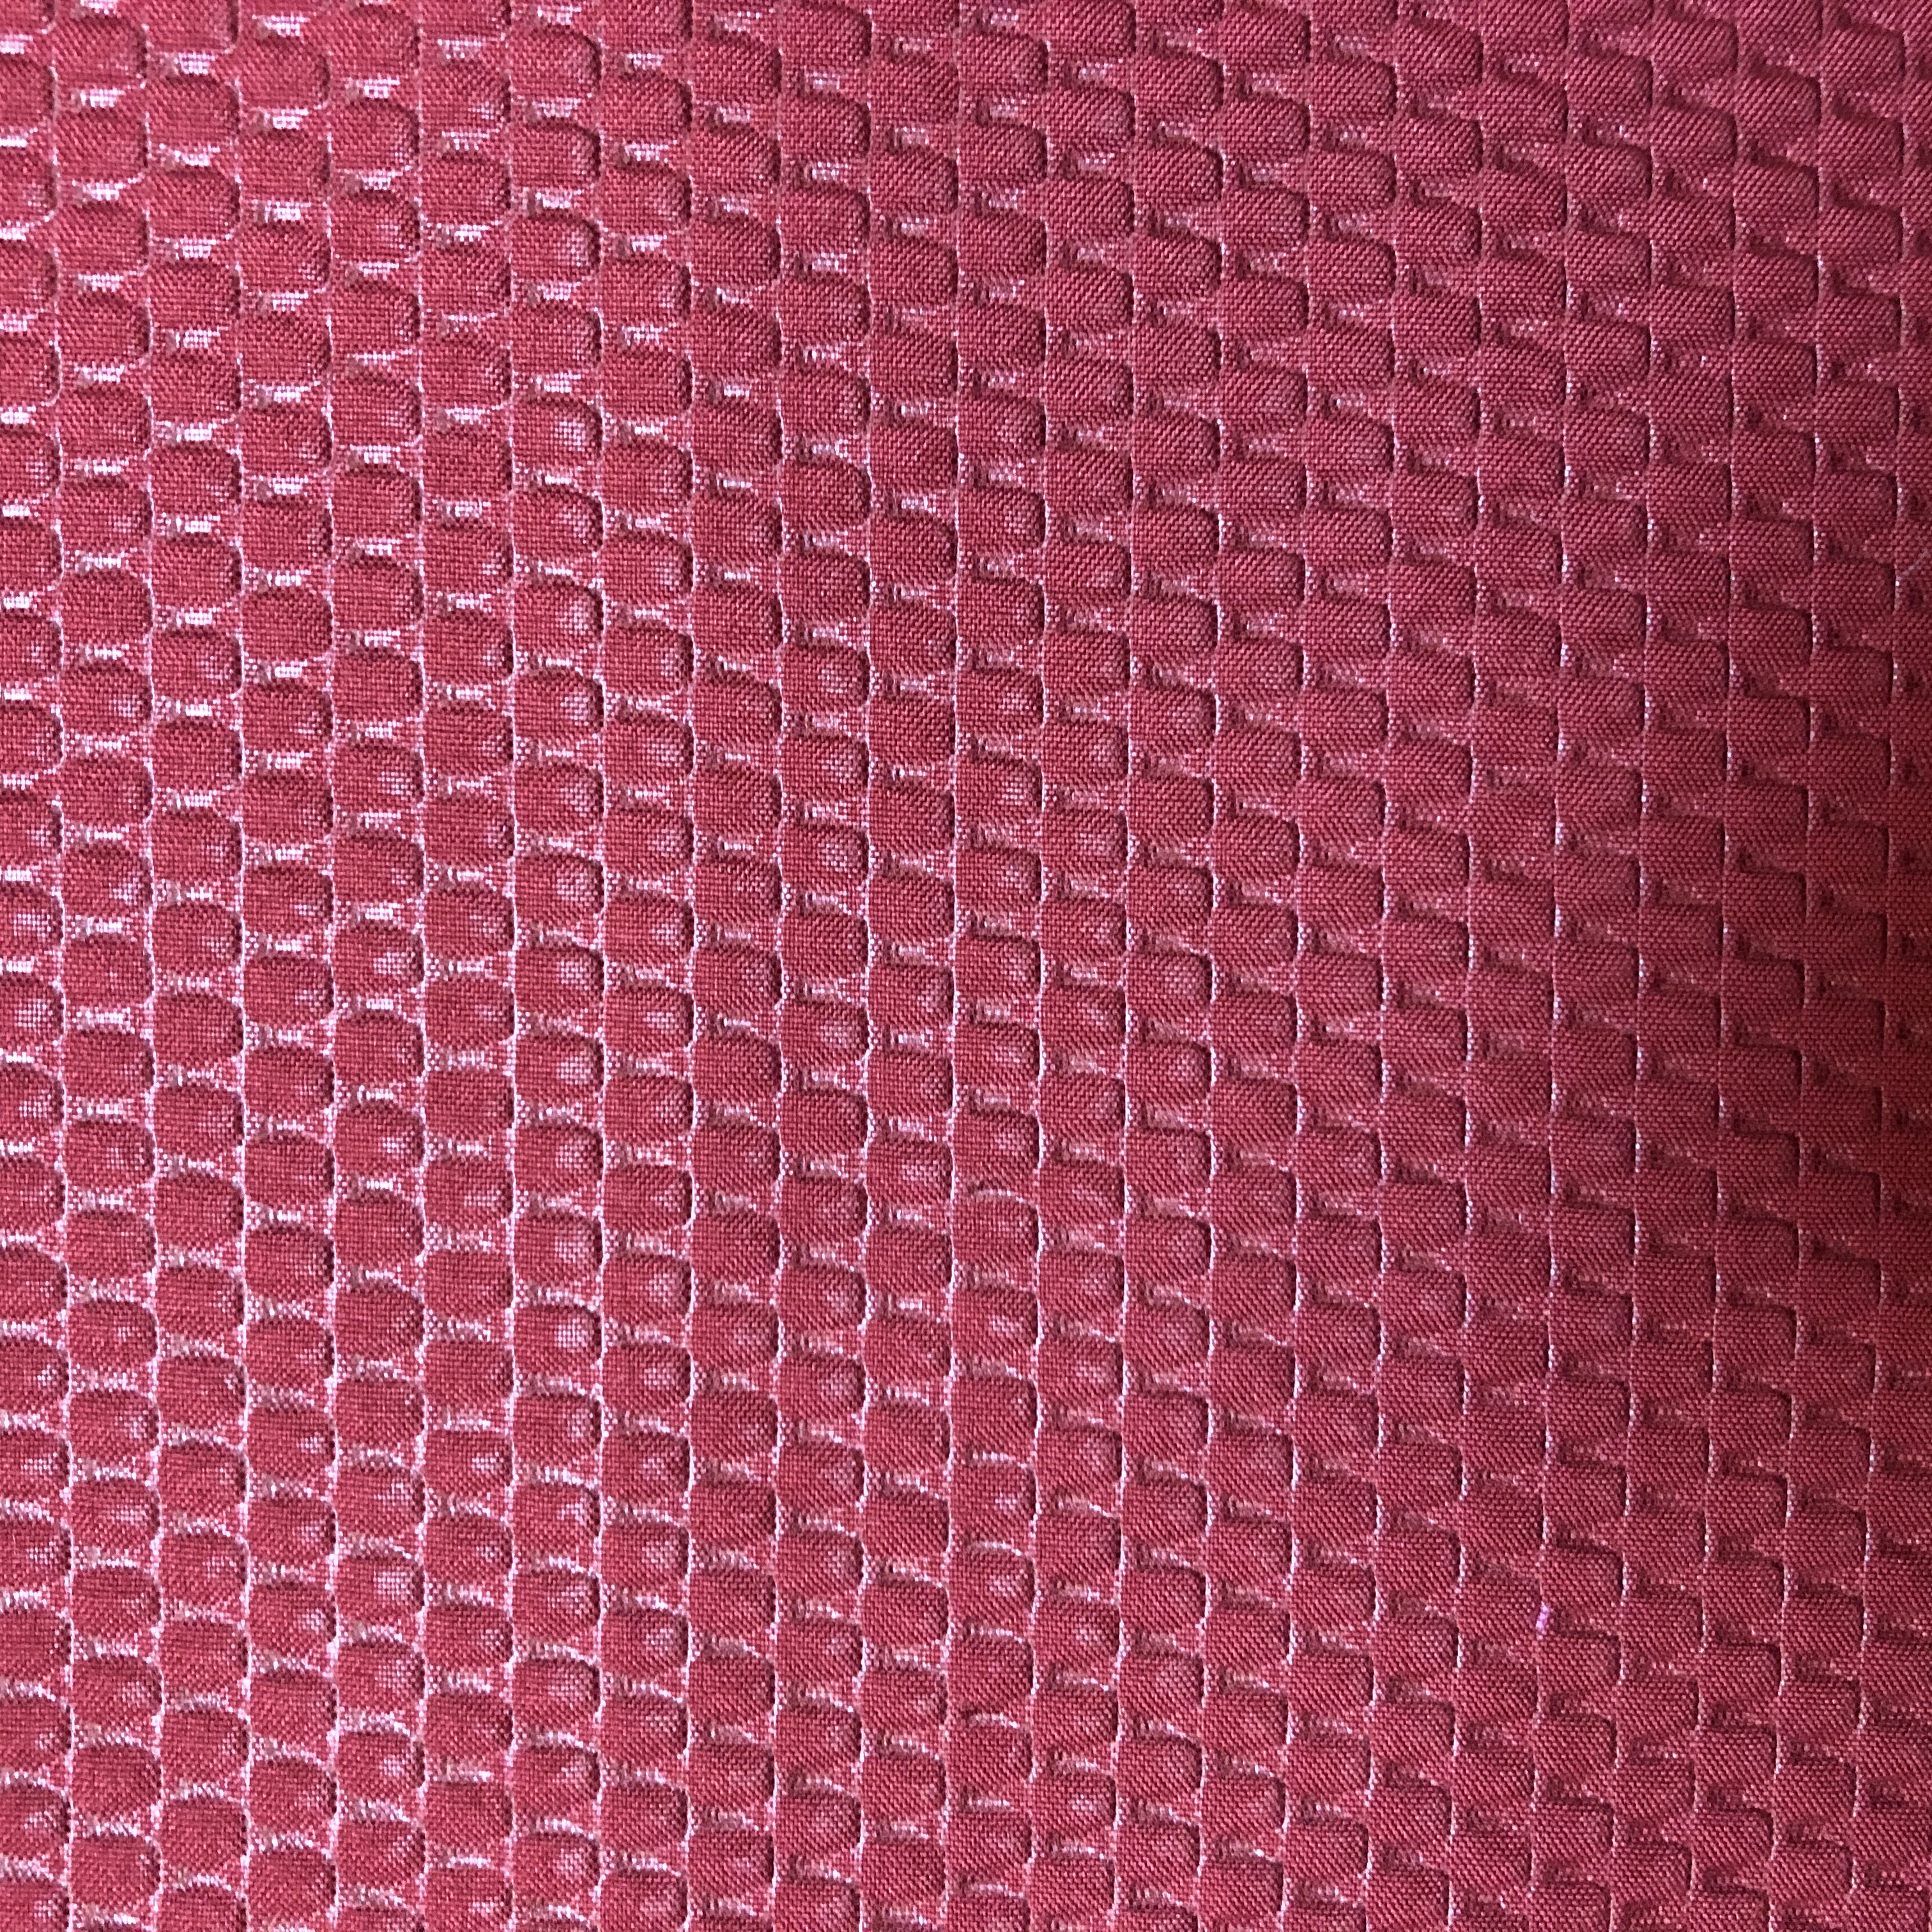 Polyester embossed microfiber bed sheet